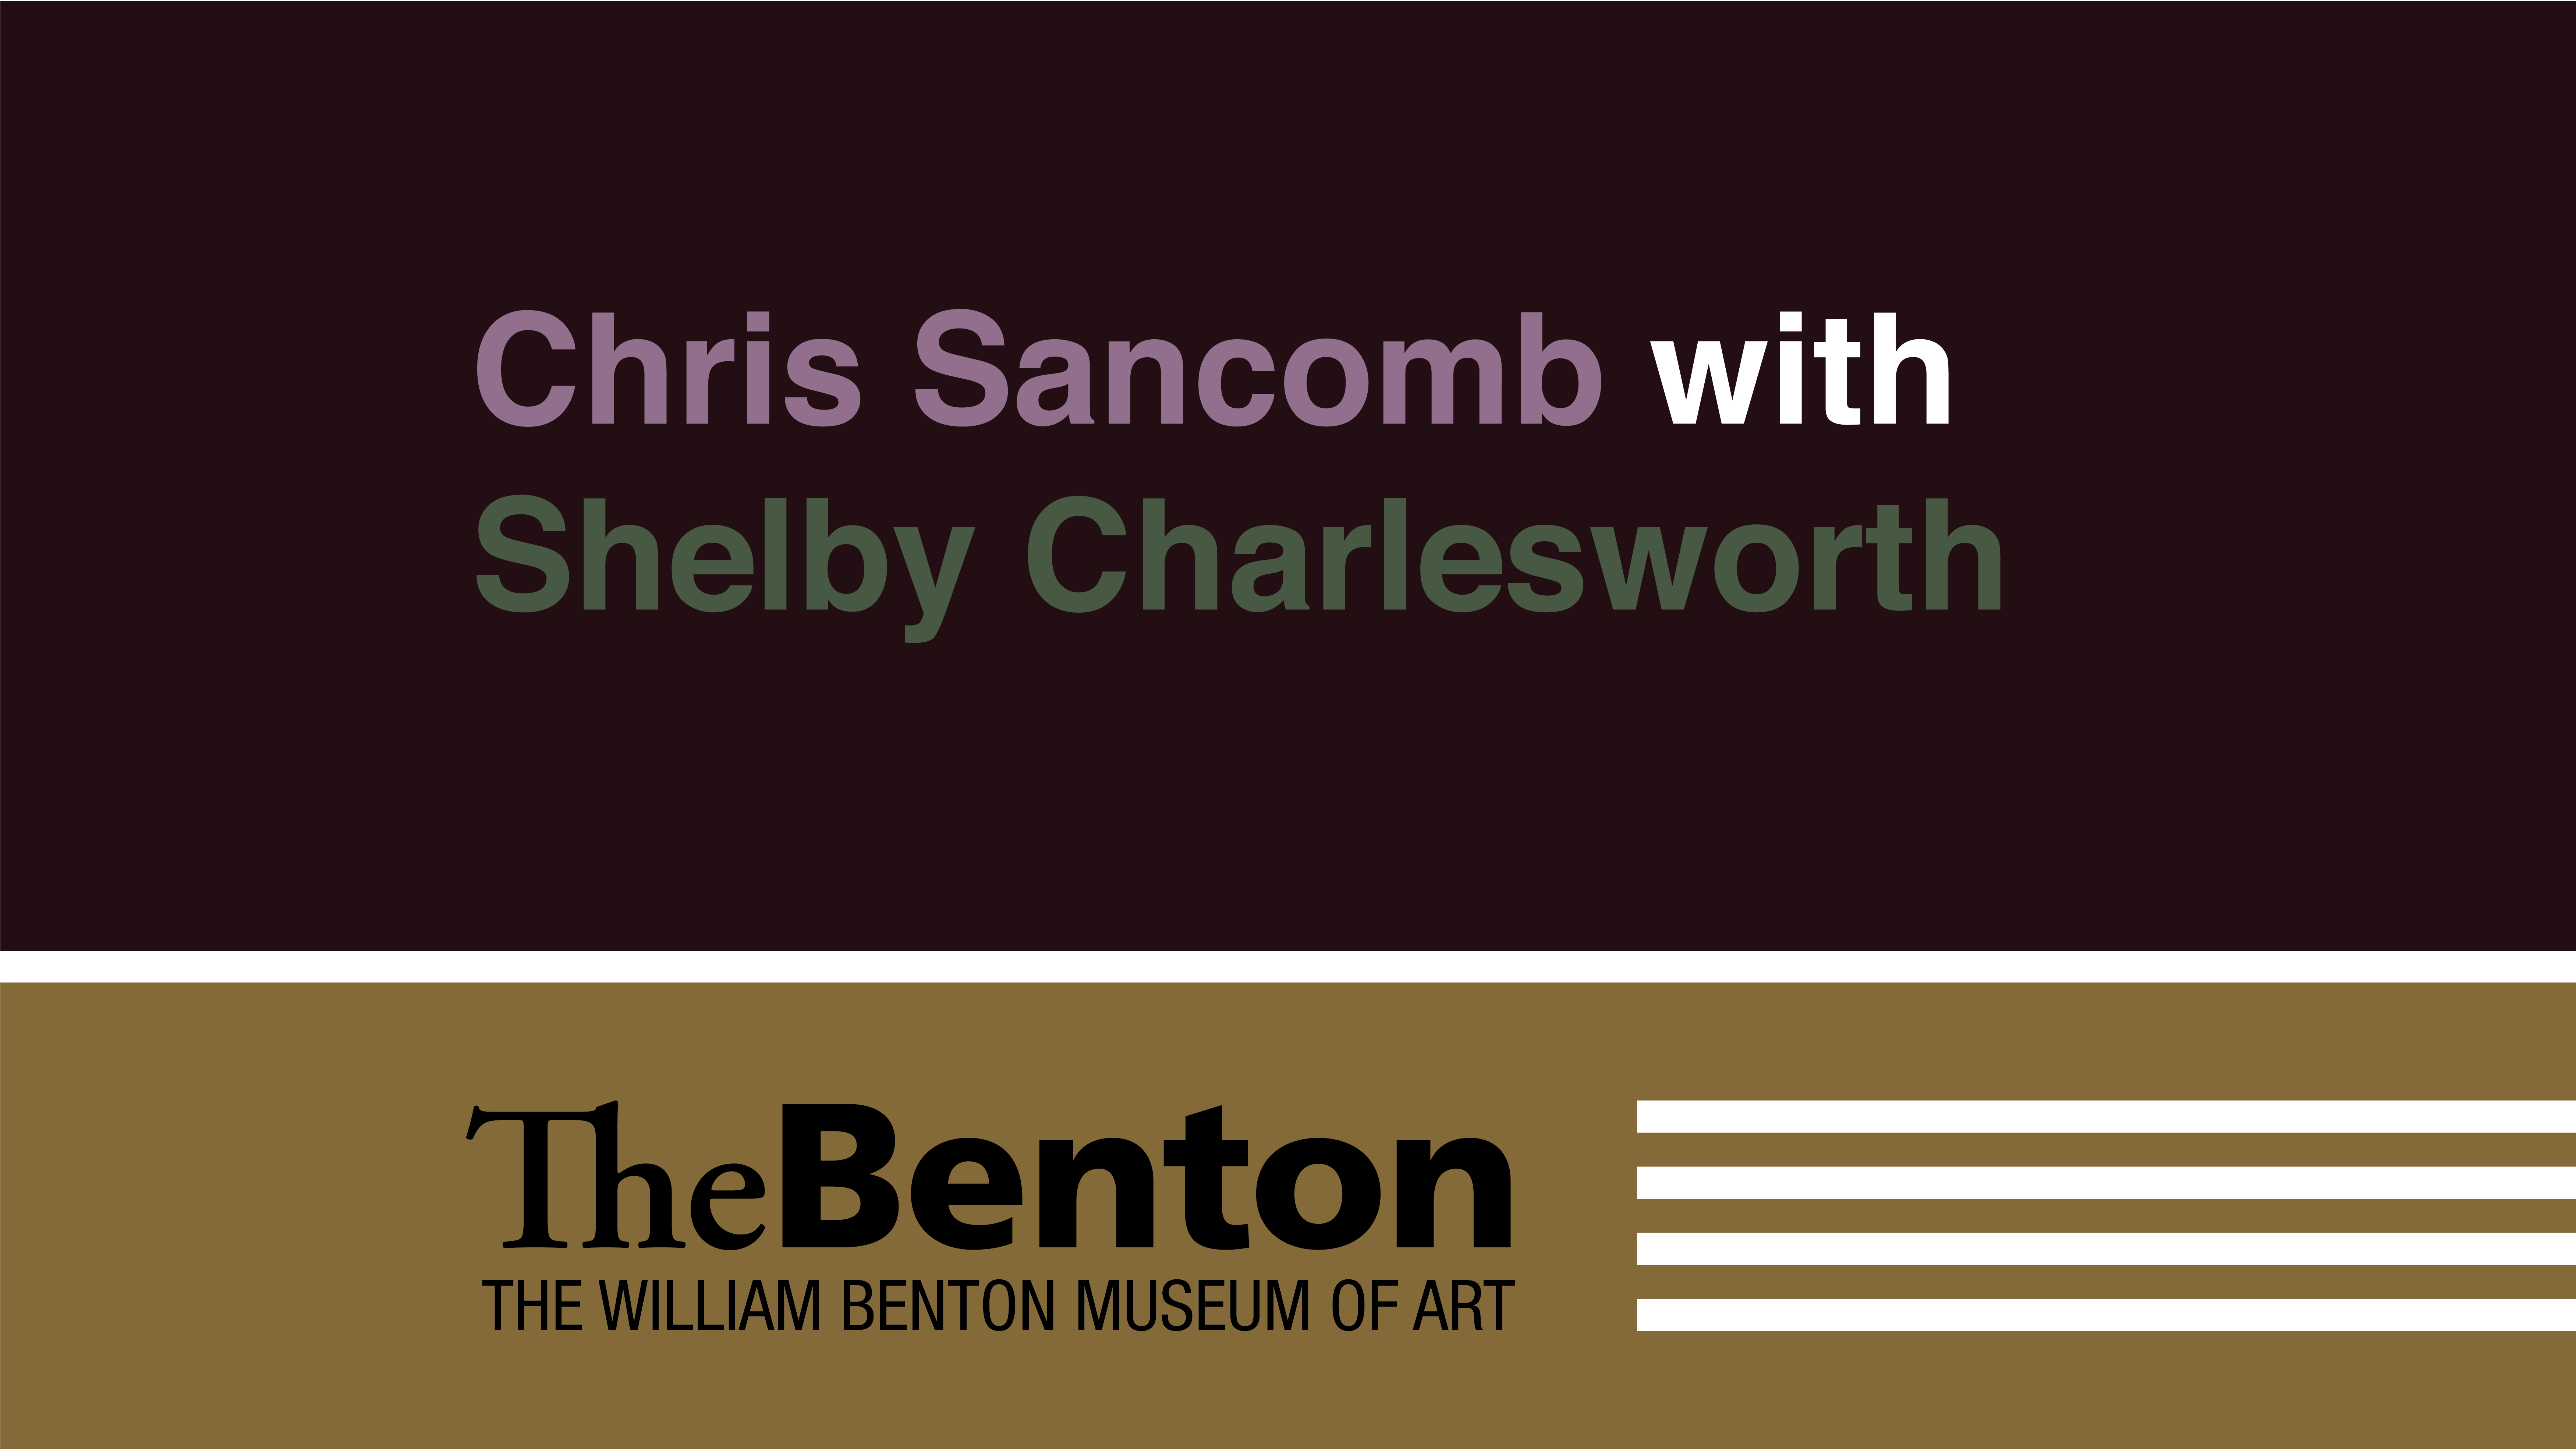 Chris Sancomb with Shelby Charlesworth